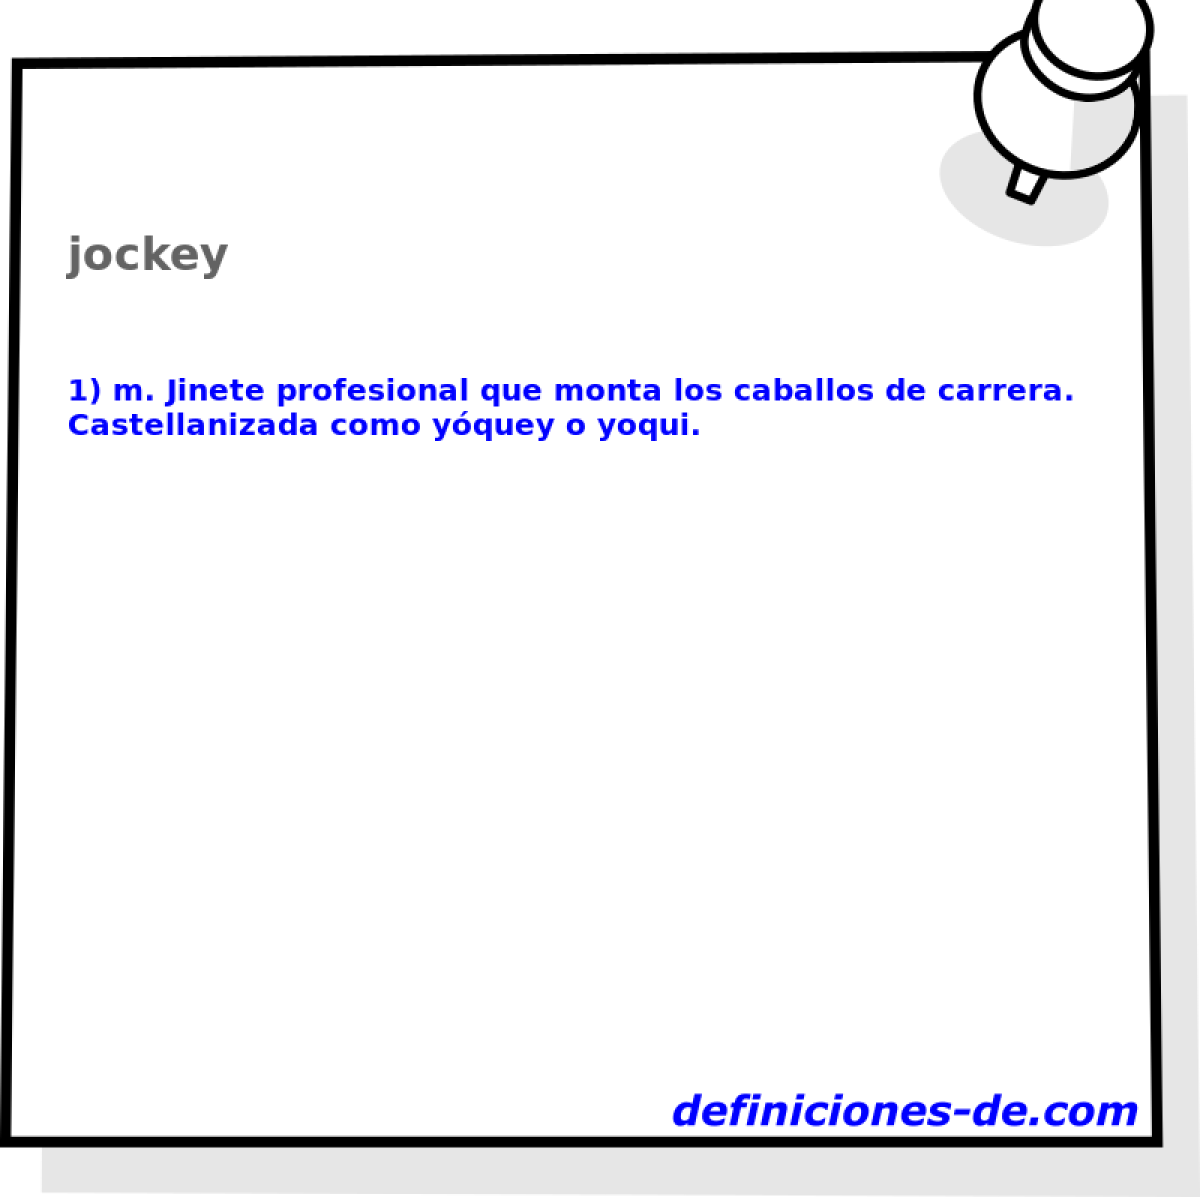 jockey 